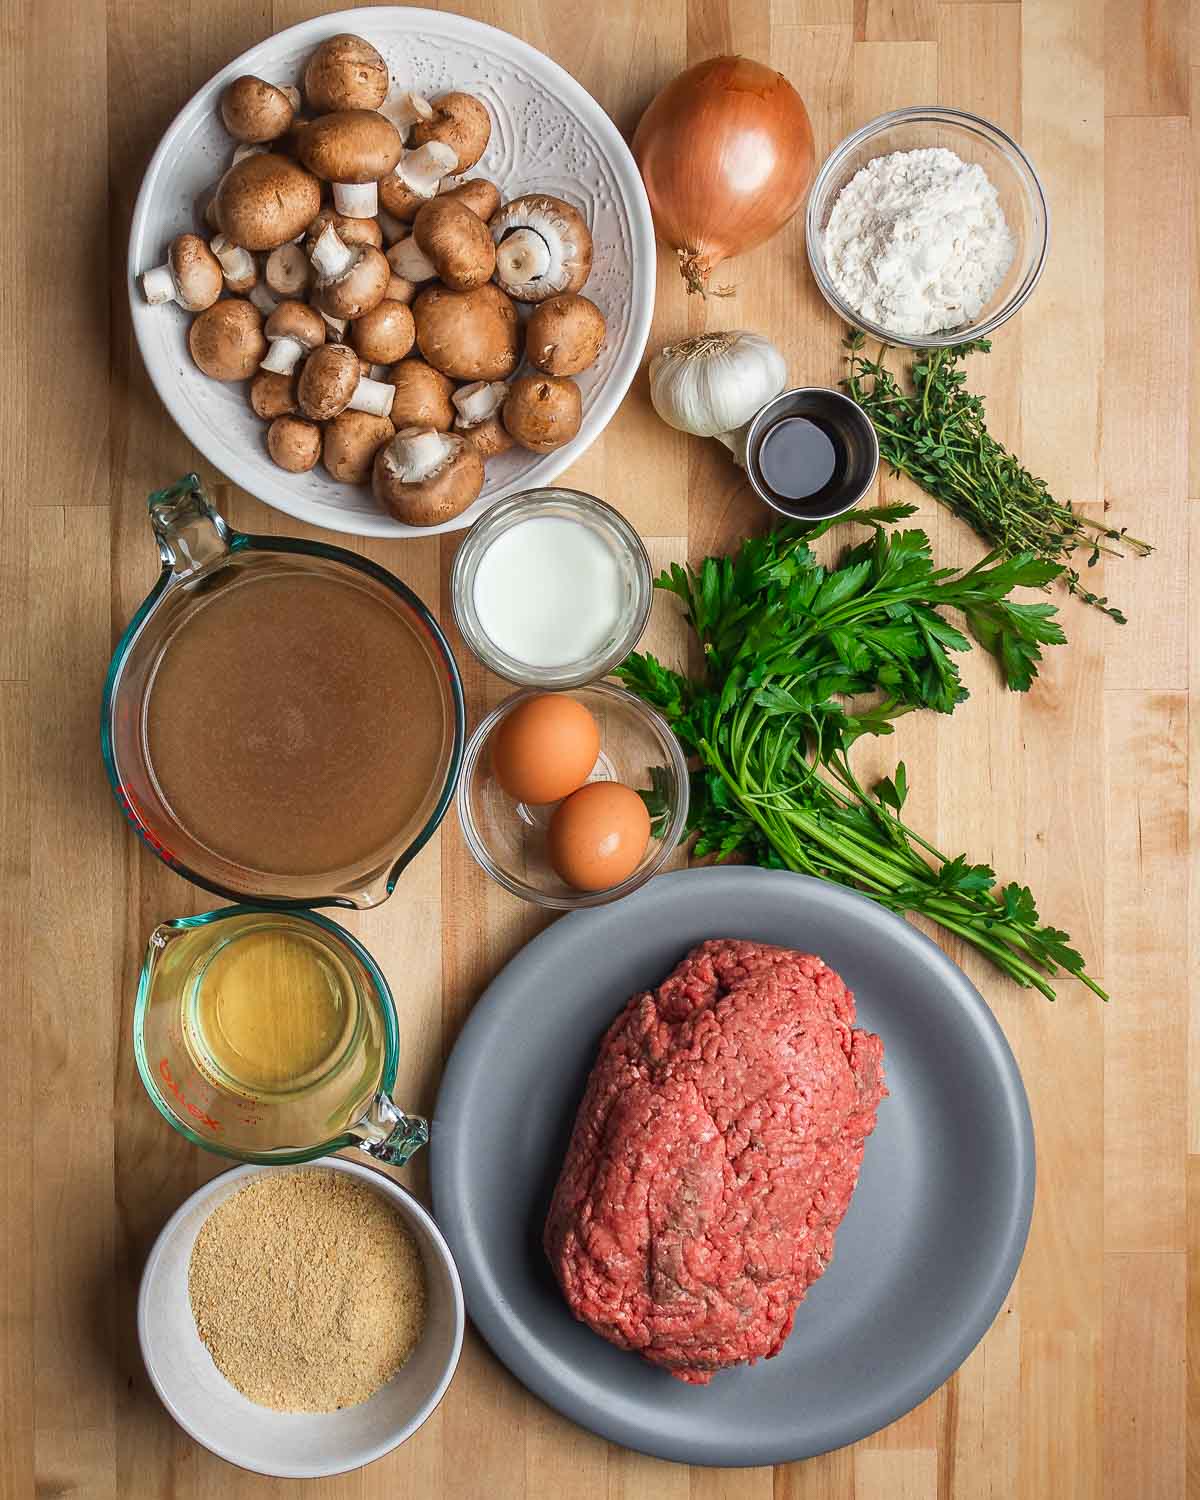 Ingredients shown: mushrooms, onion, flour, garlic, worcestershire sauce, thyme, parsley, beef stock, milk, eggs, white wine, breadcrumbs, and ground beef.